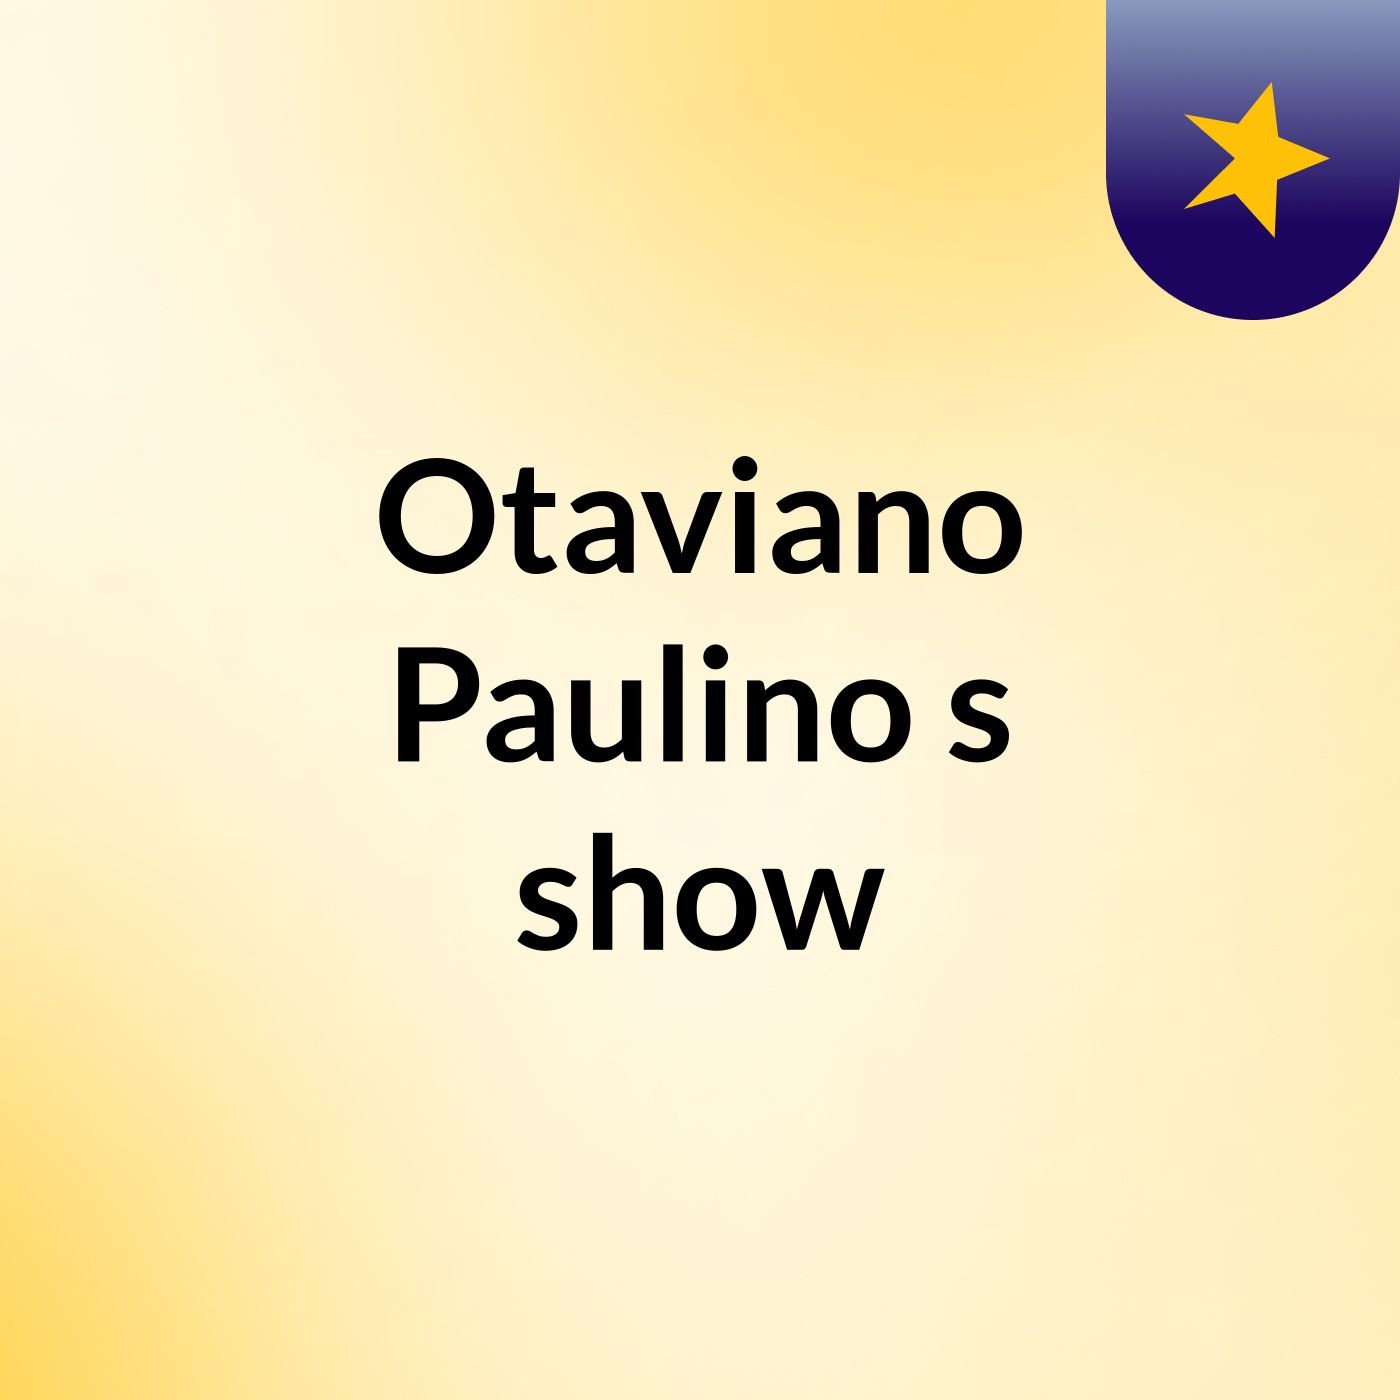 Episódio 30 - Otaviano Paulino's show